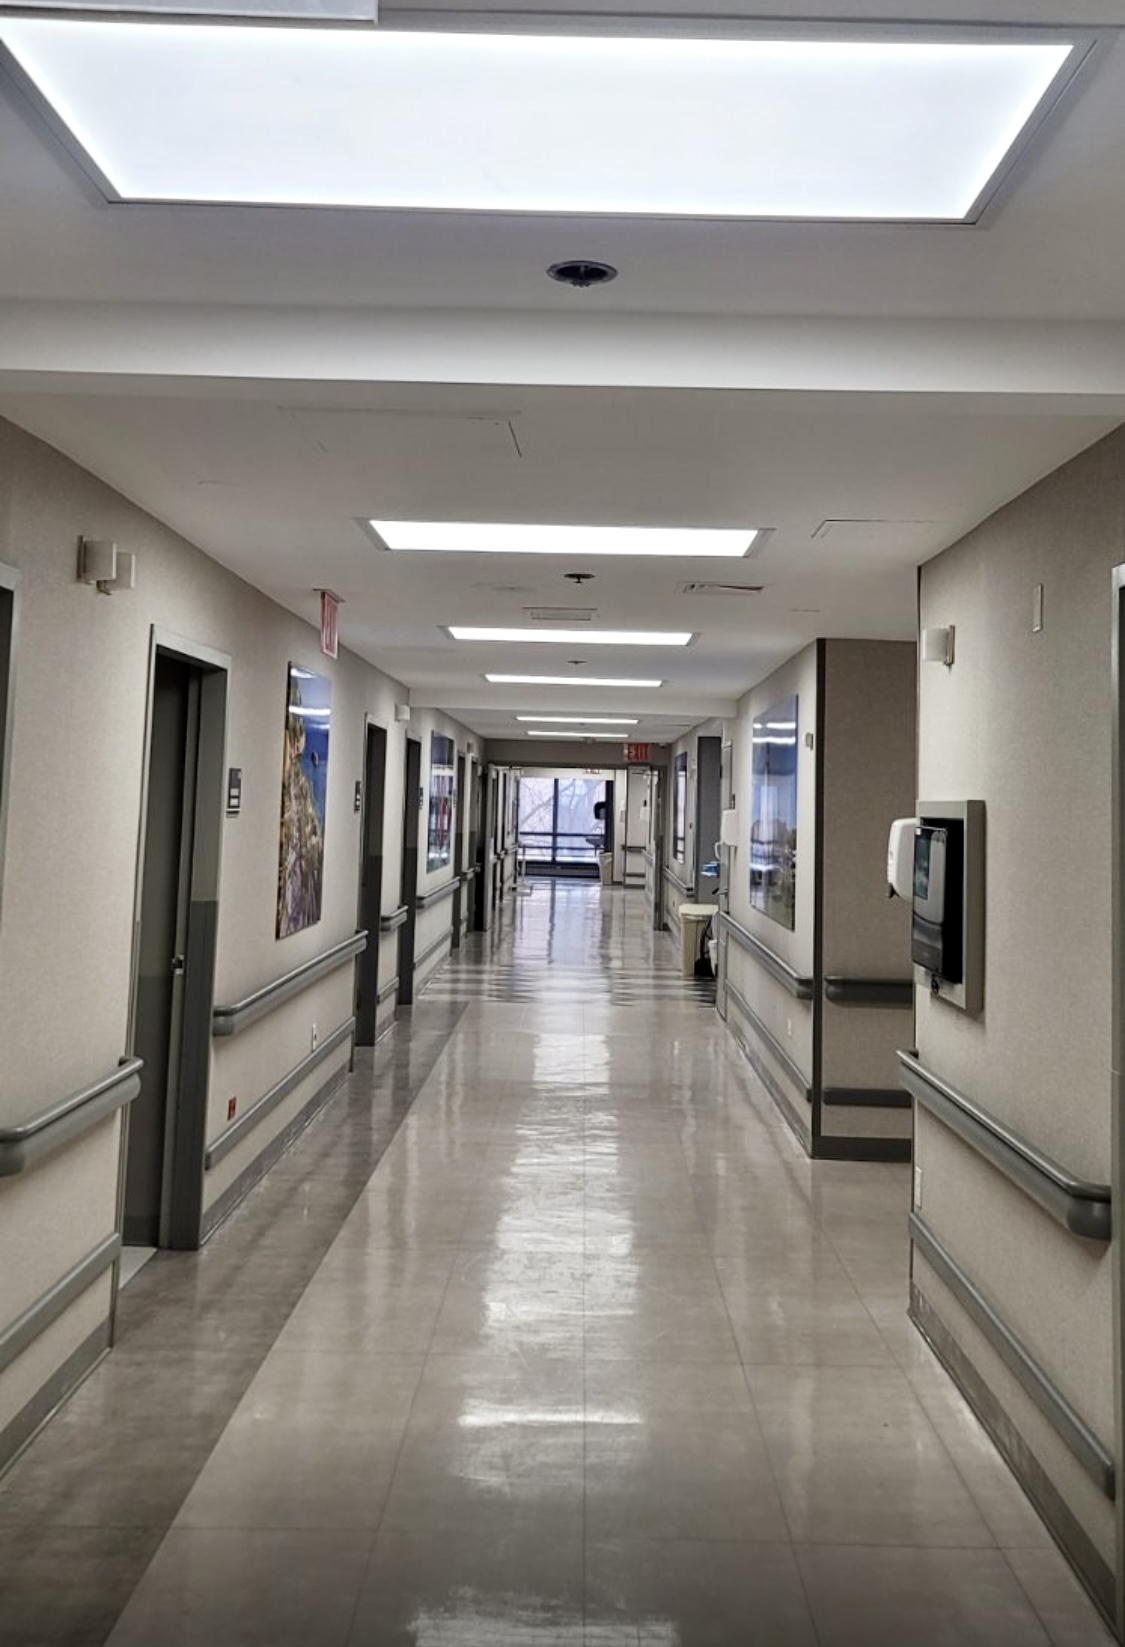 A long hallway with doors